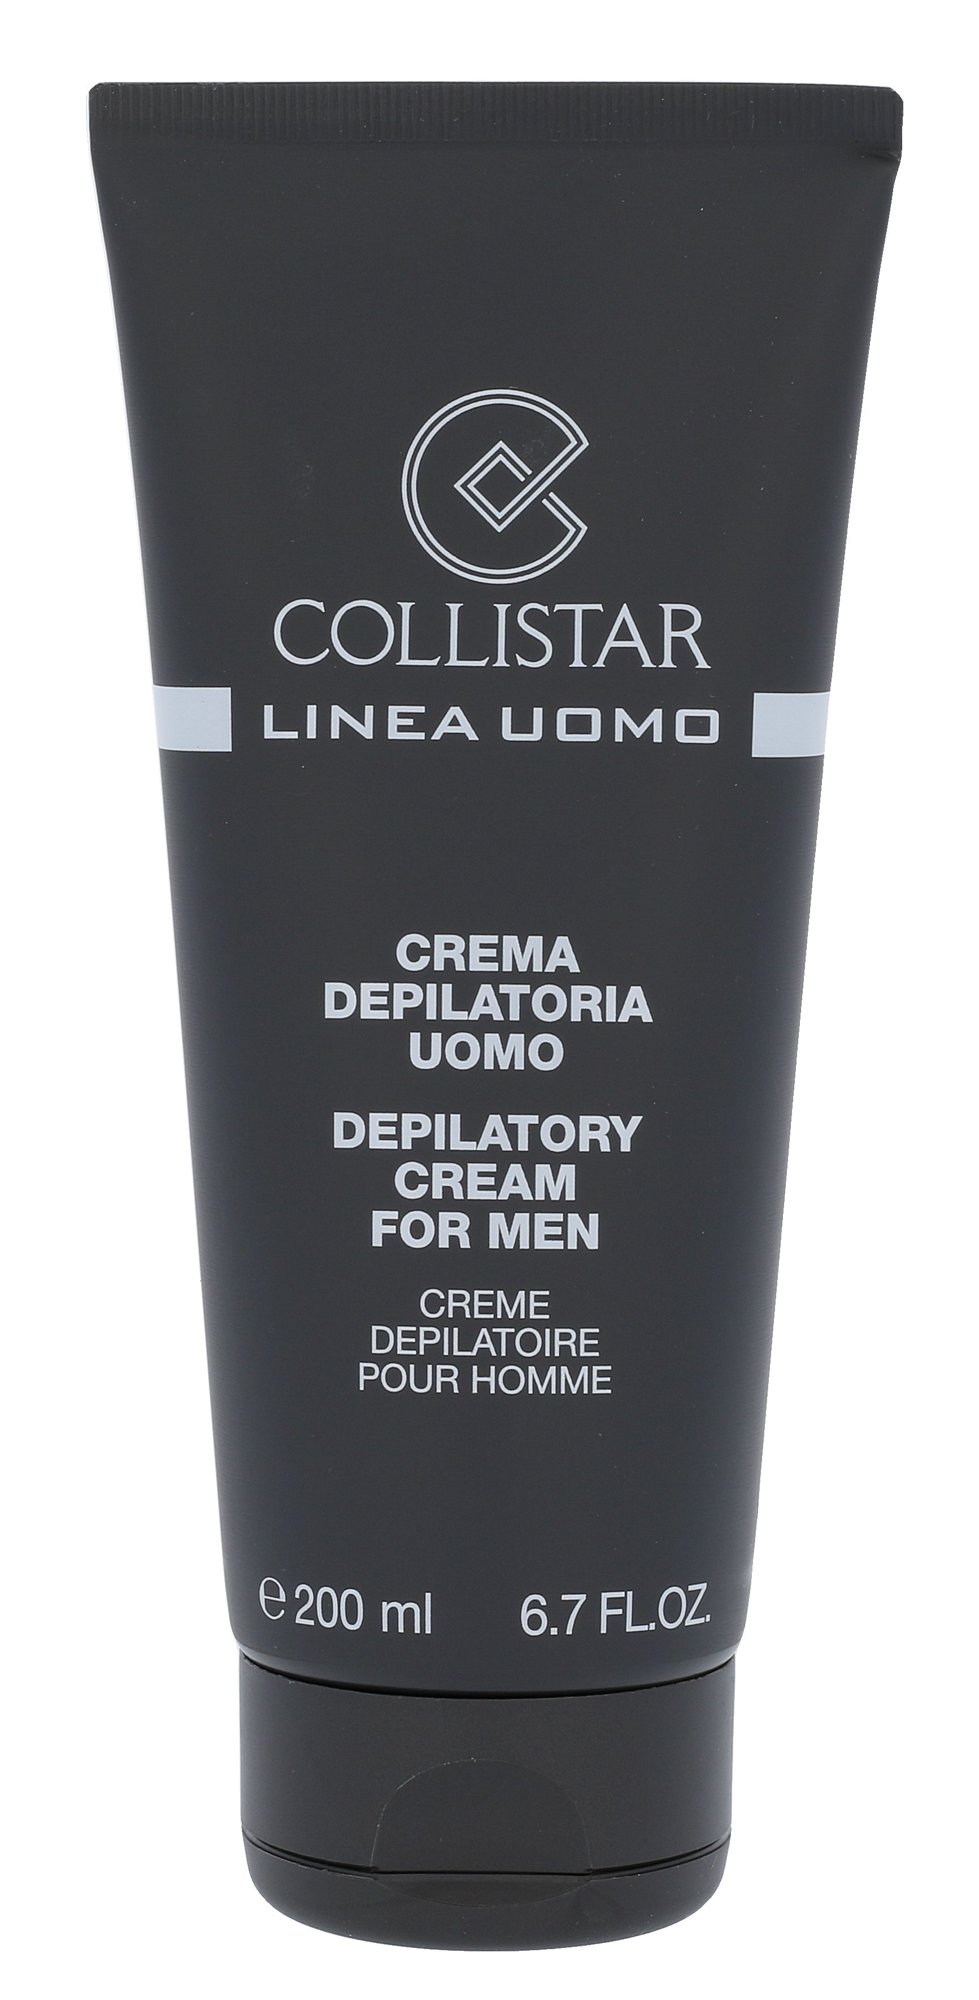 Collistar Linea Uomo Depilatory Cream For Men skutimosi kremas